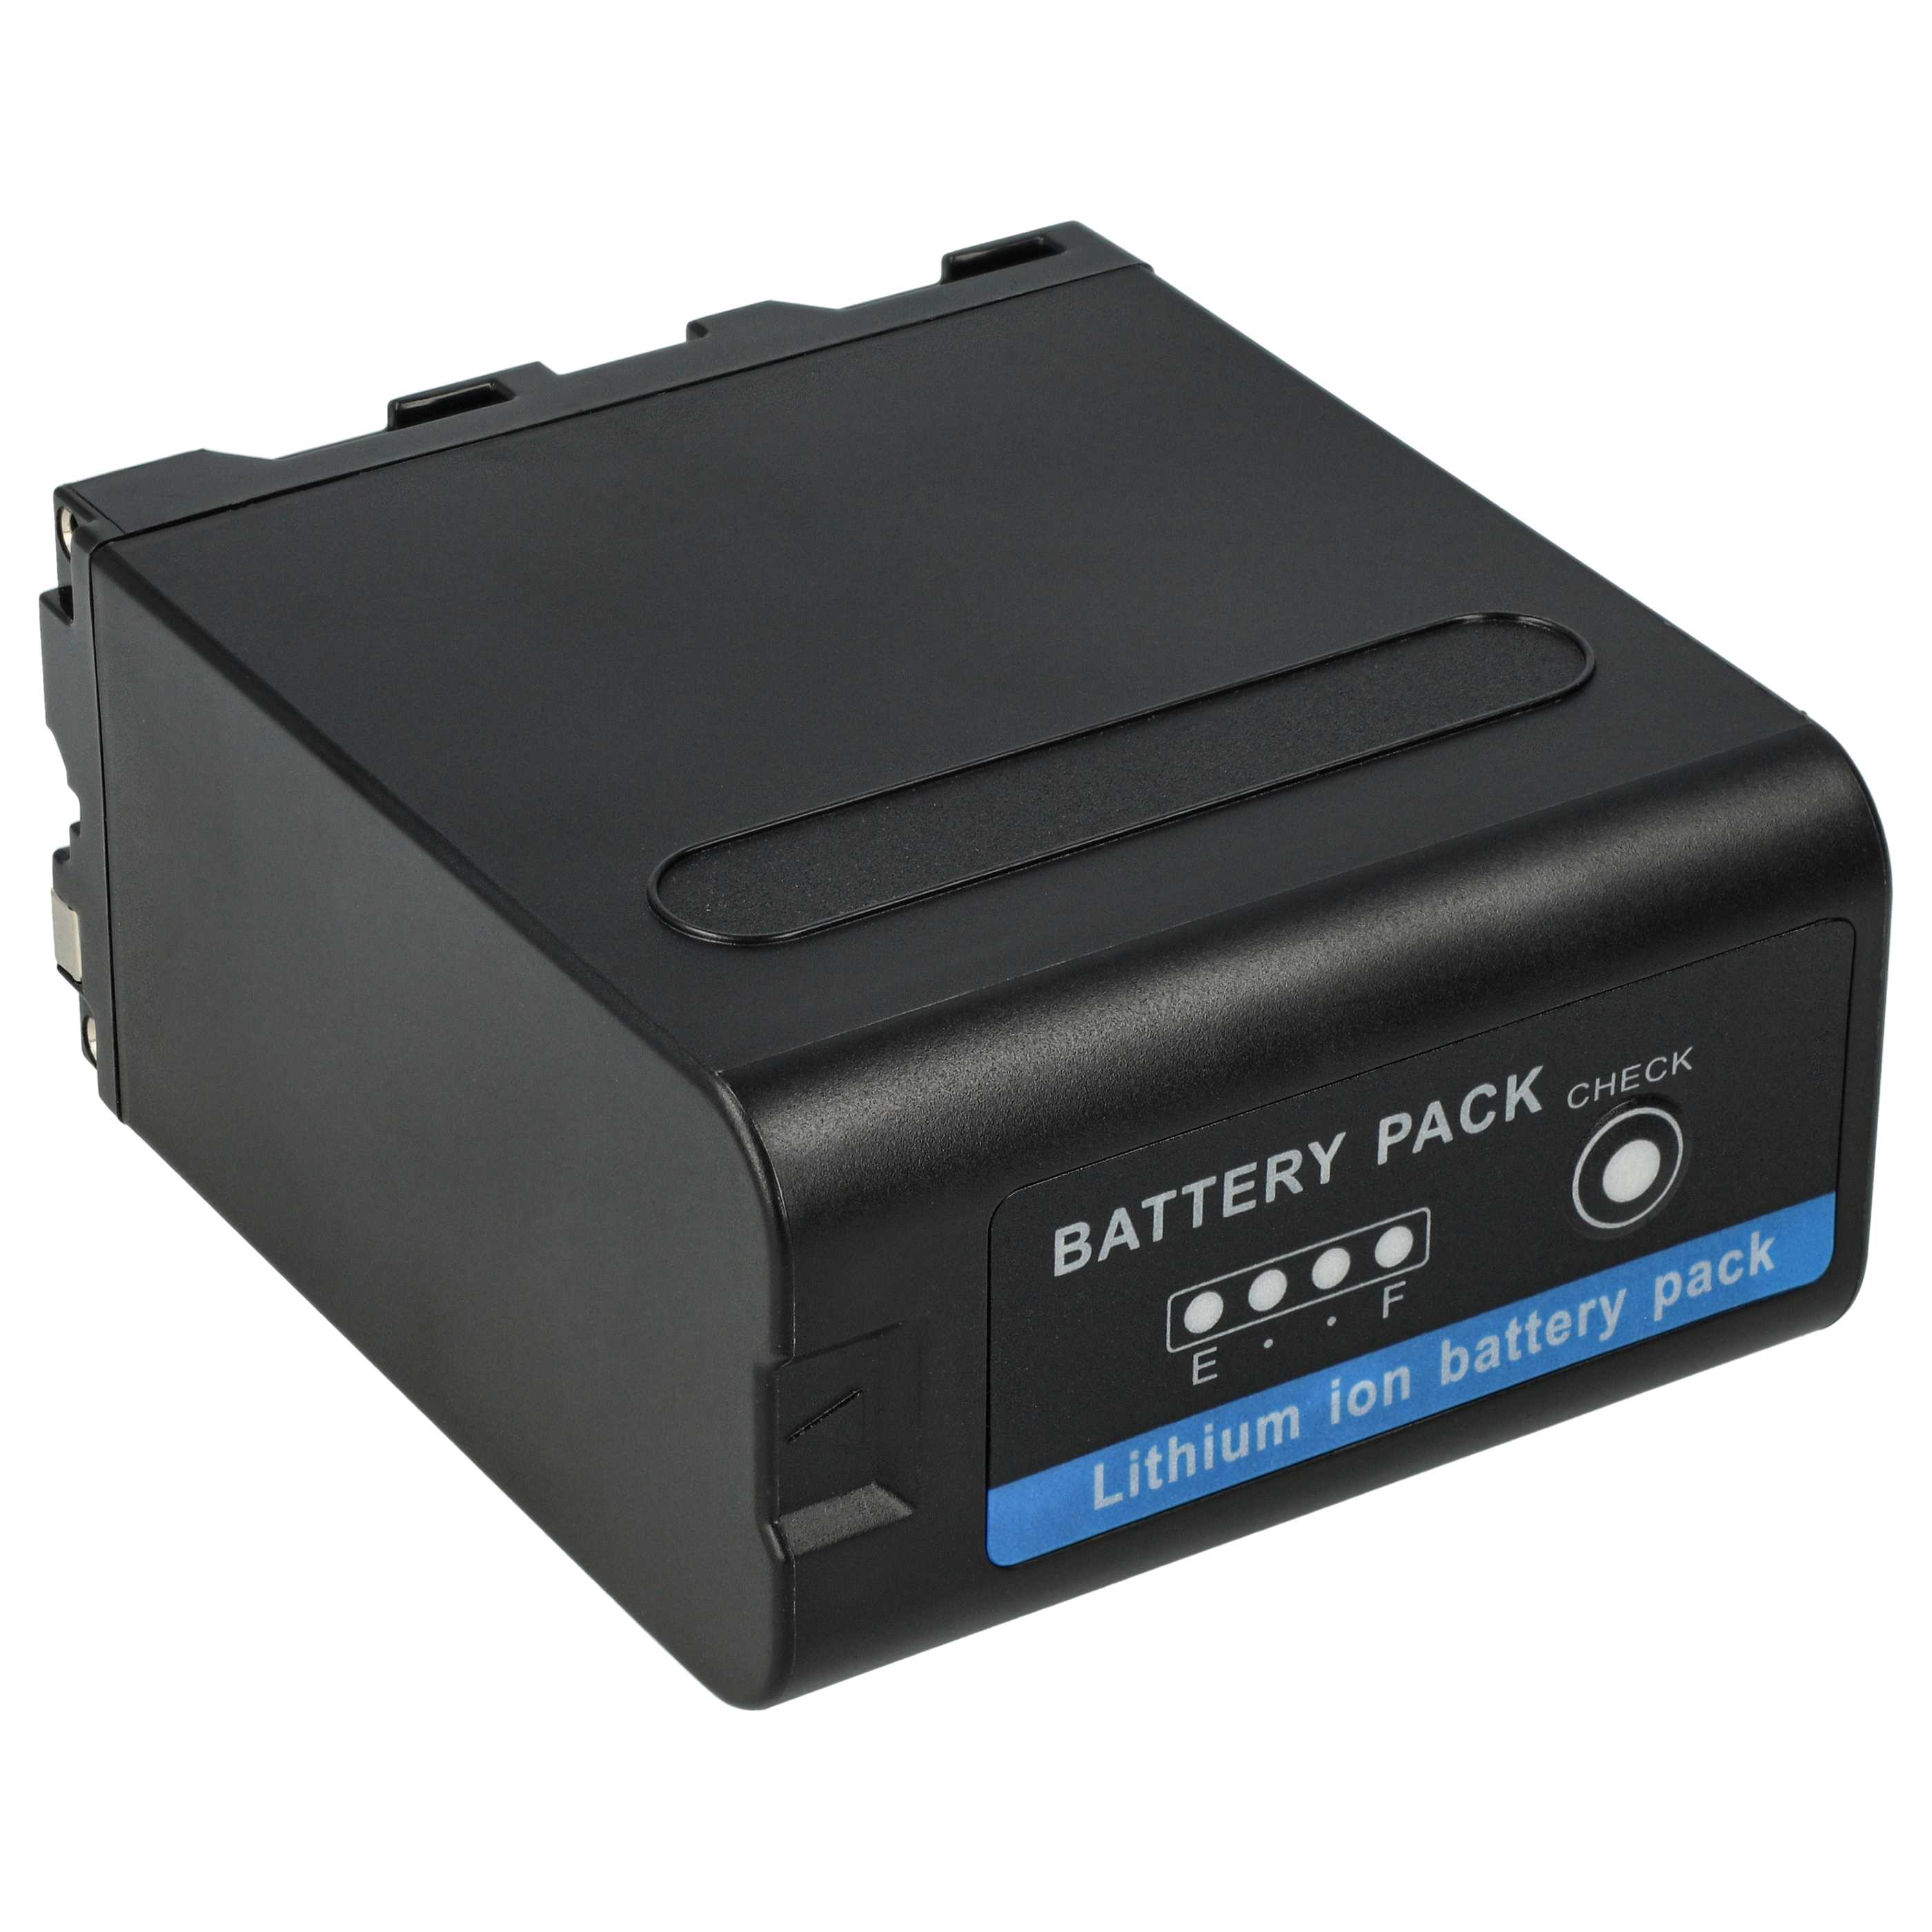 Akumulator do kamery cyfrowej / wideo zamiennik Grundig BP-10, BP-9, BP-8 - 10400 mAh 7,4 V Li-Ion